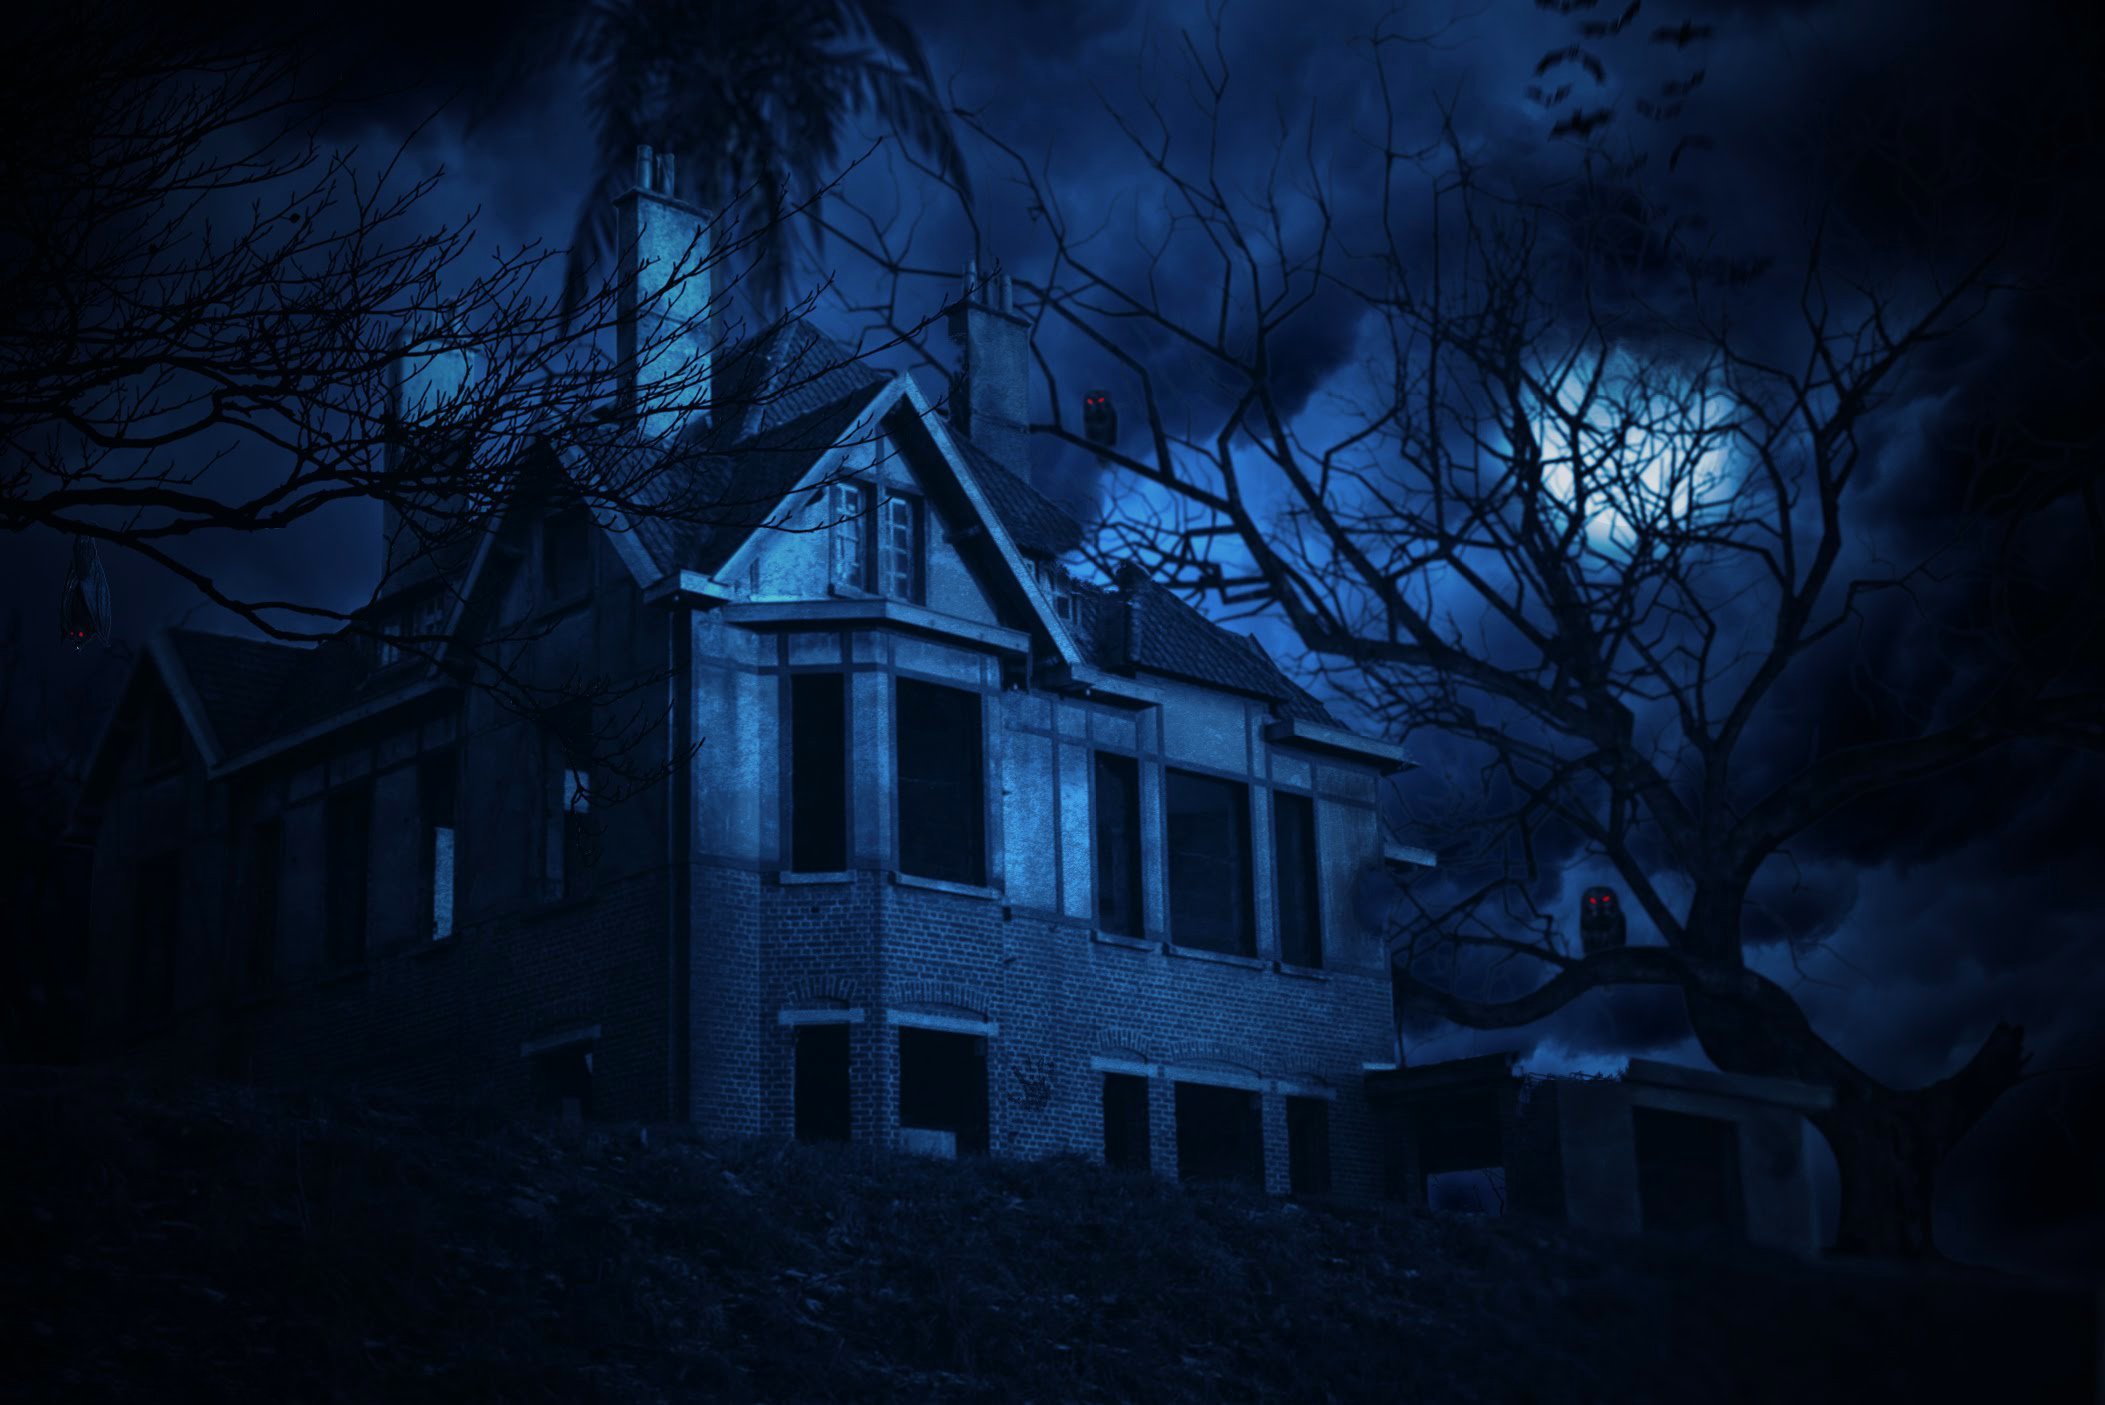 Scary horror house 2. Страшный дом. Страшный фон. Жуткий дом. Страшный дом ночью.